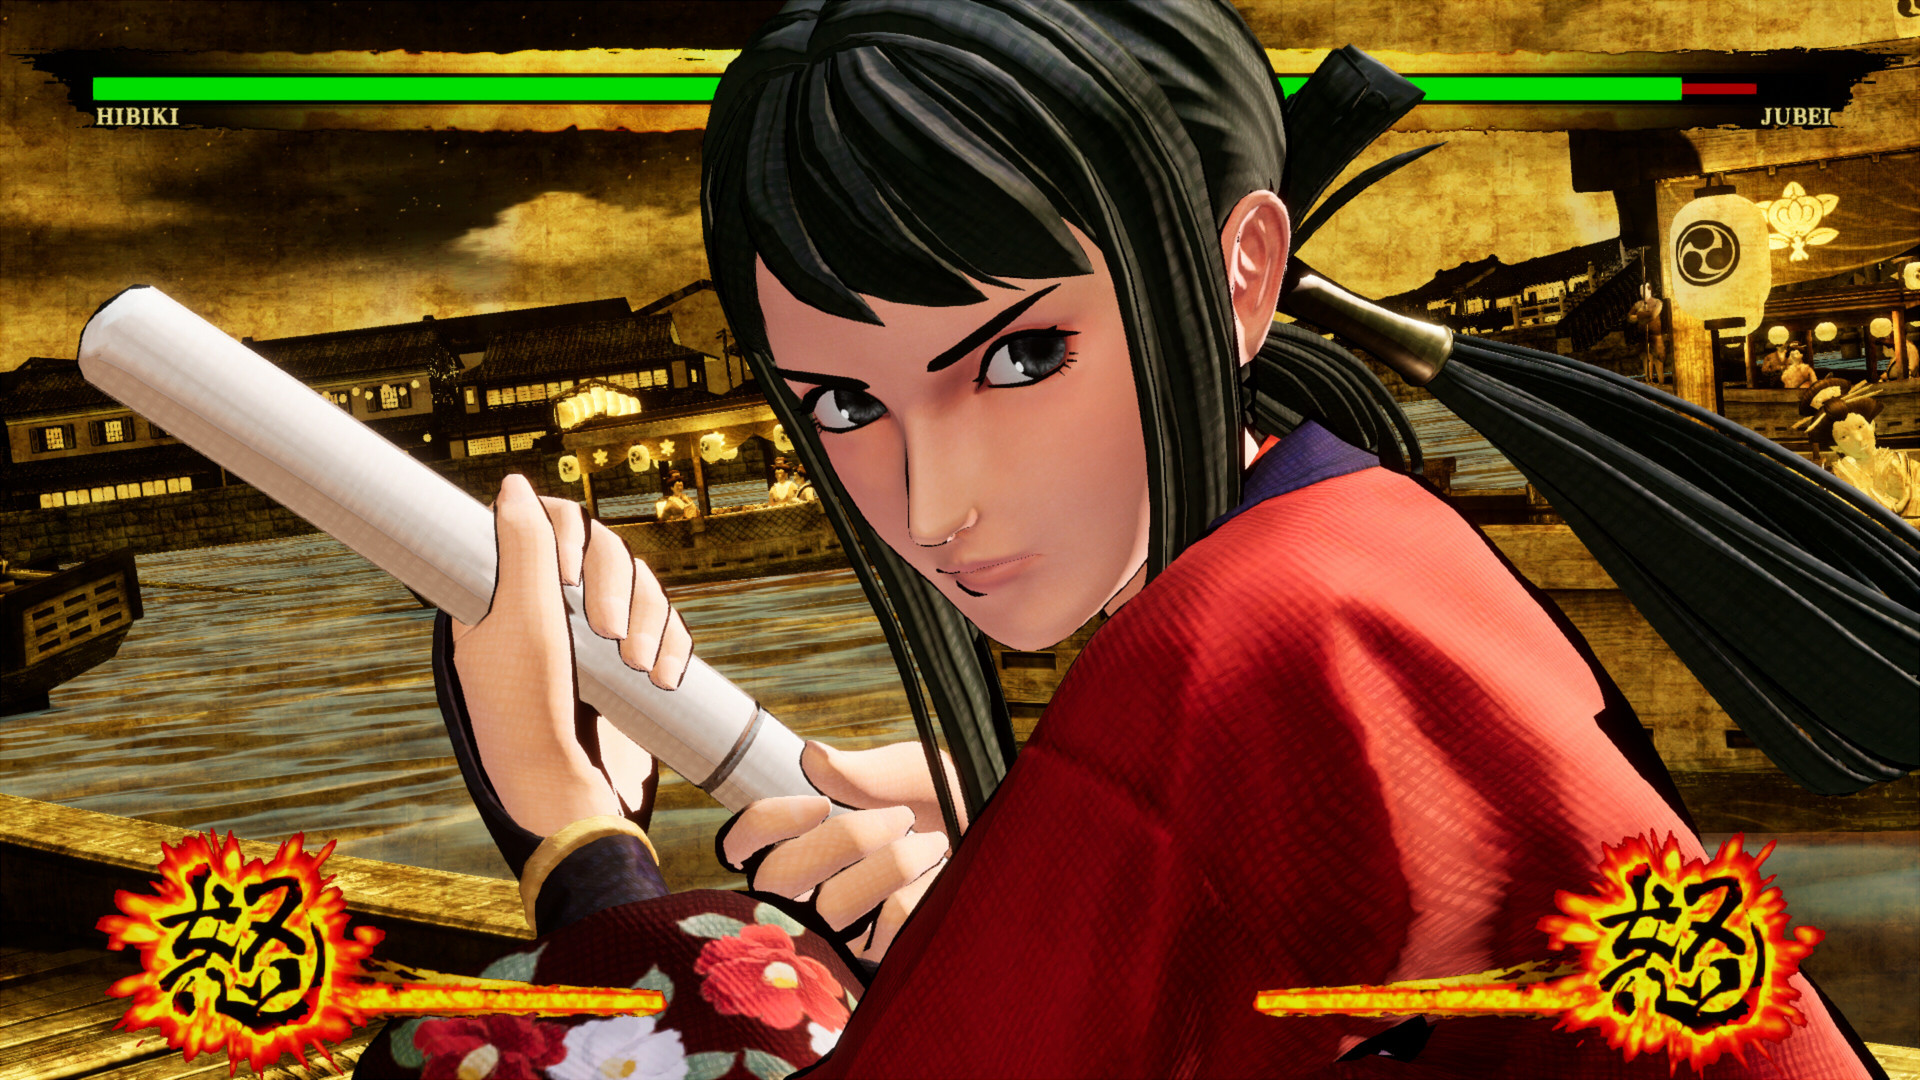 SAMURAI SHODOWN - DLC CHARACTER "HIBIKI TAKANE" Featured Screenshot #1